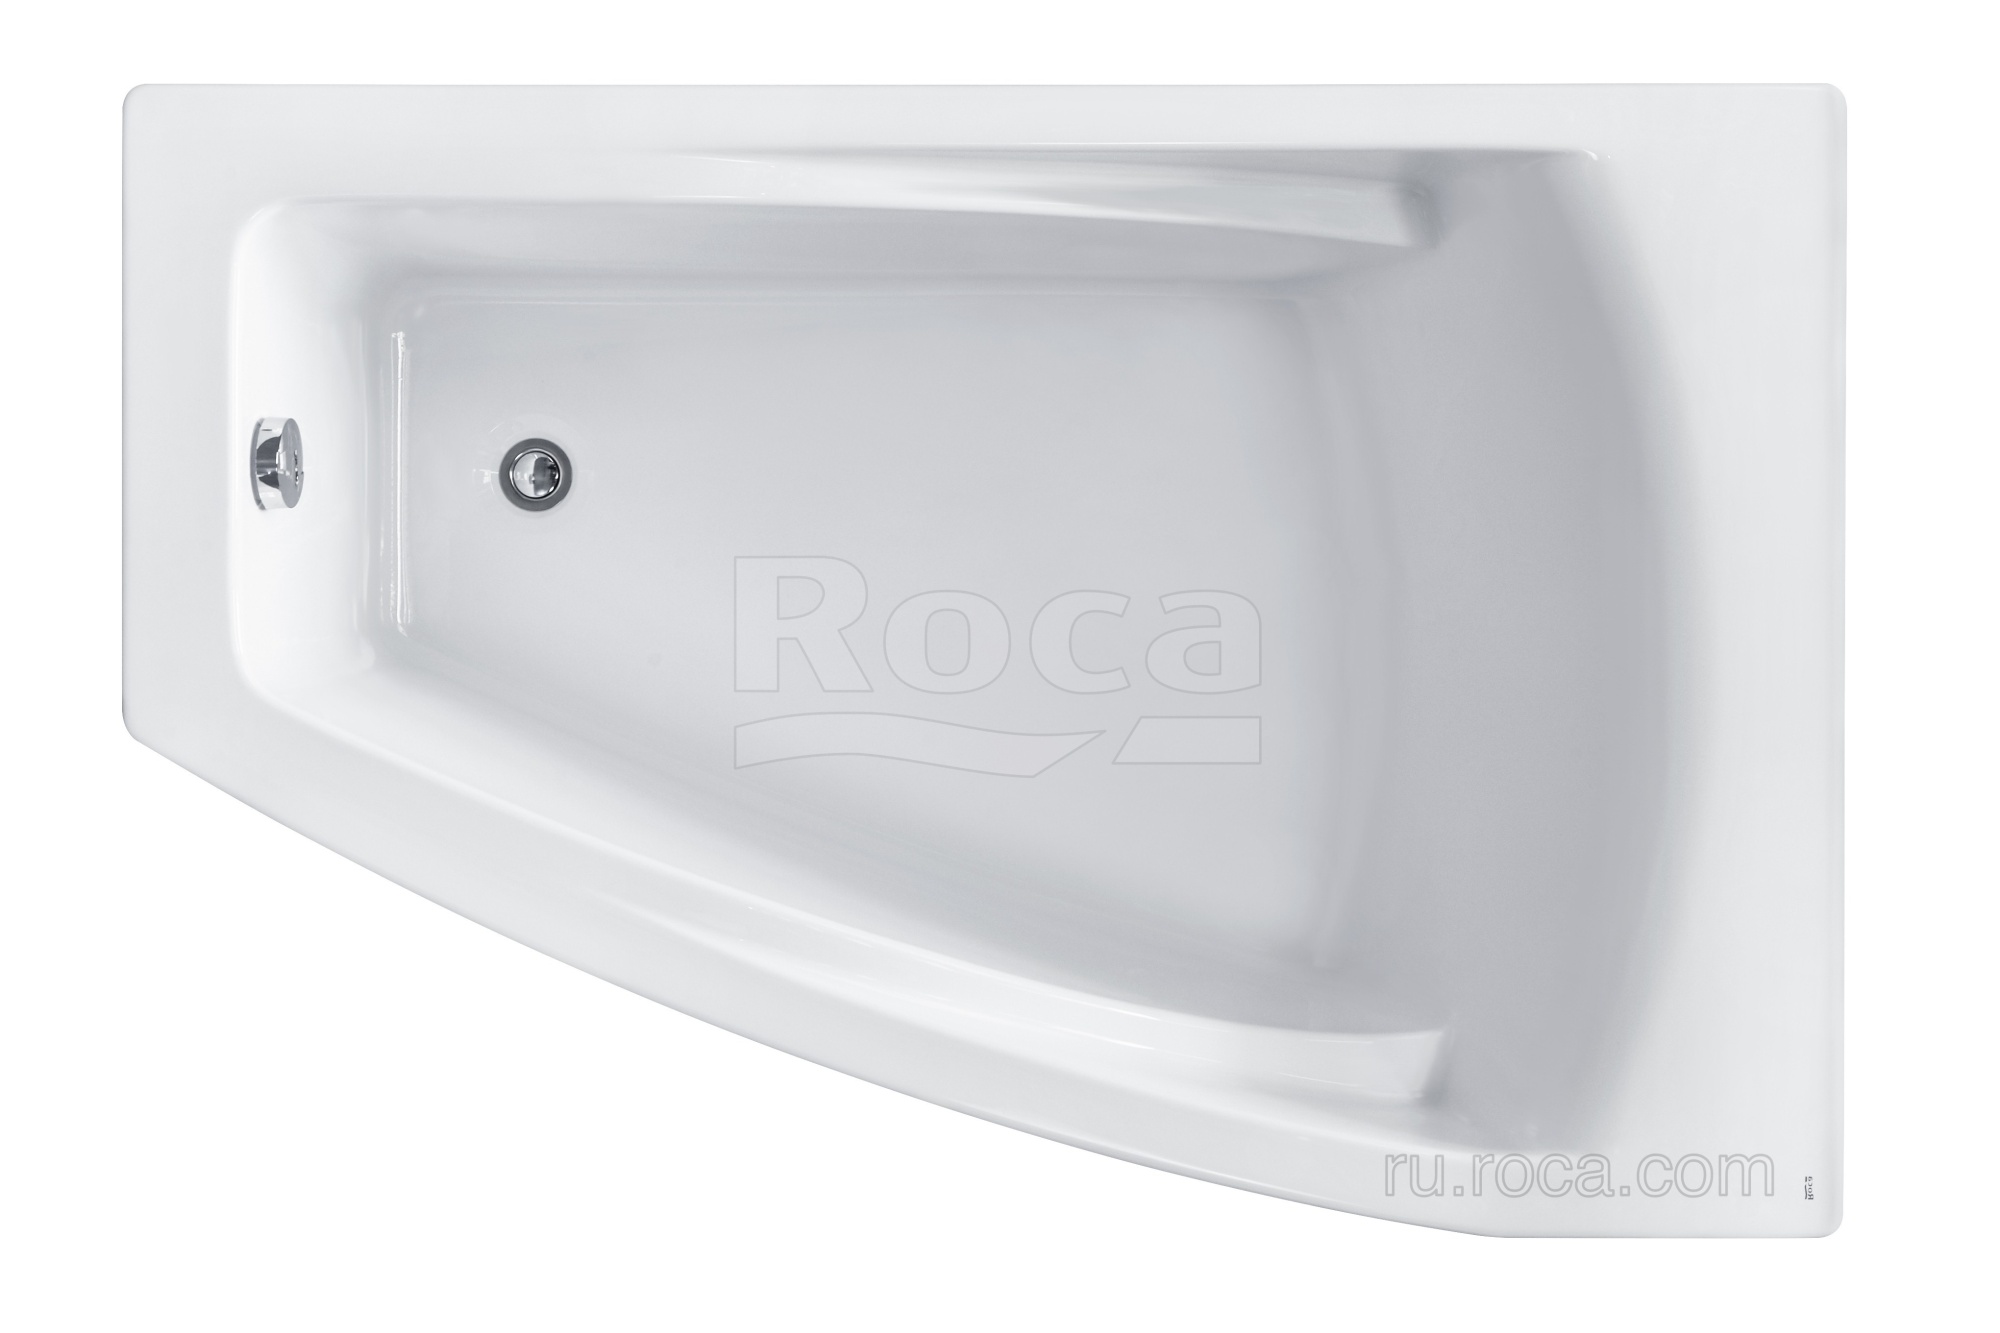 Корпус ванны Roca Hall Angular 150x100 R